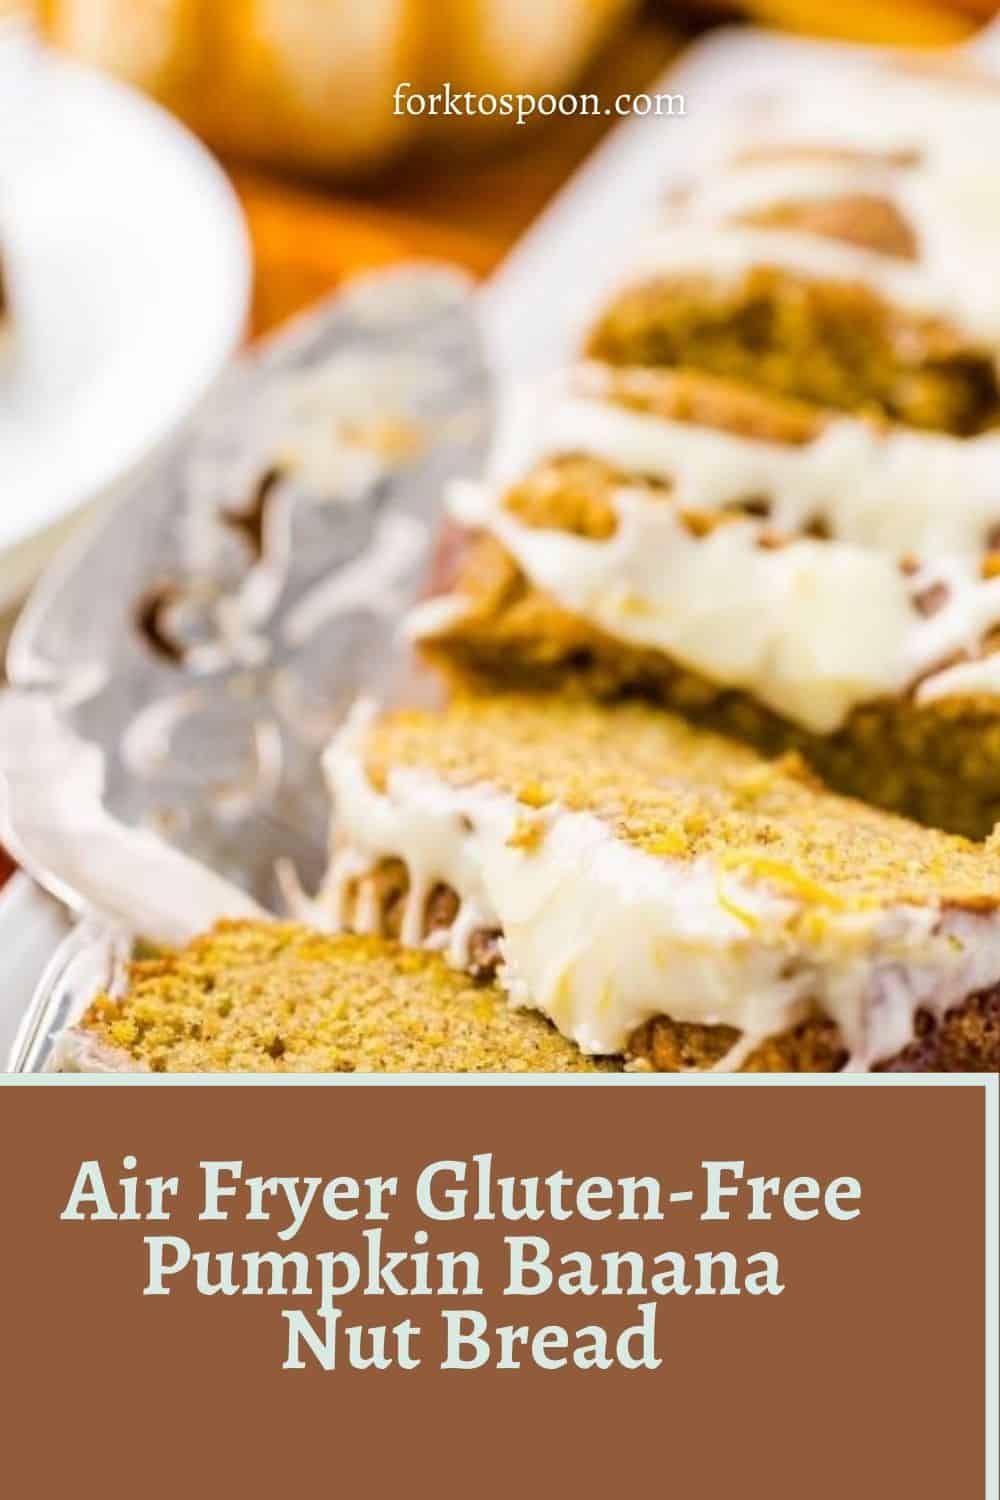 Air Fryer Gluten-Free Pumpkin Banana Nut Bread